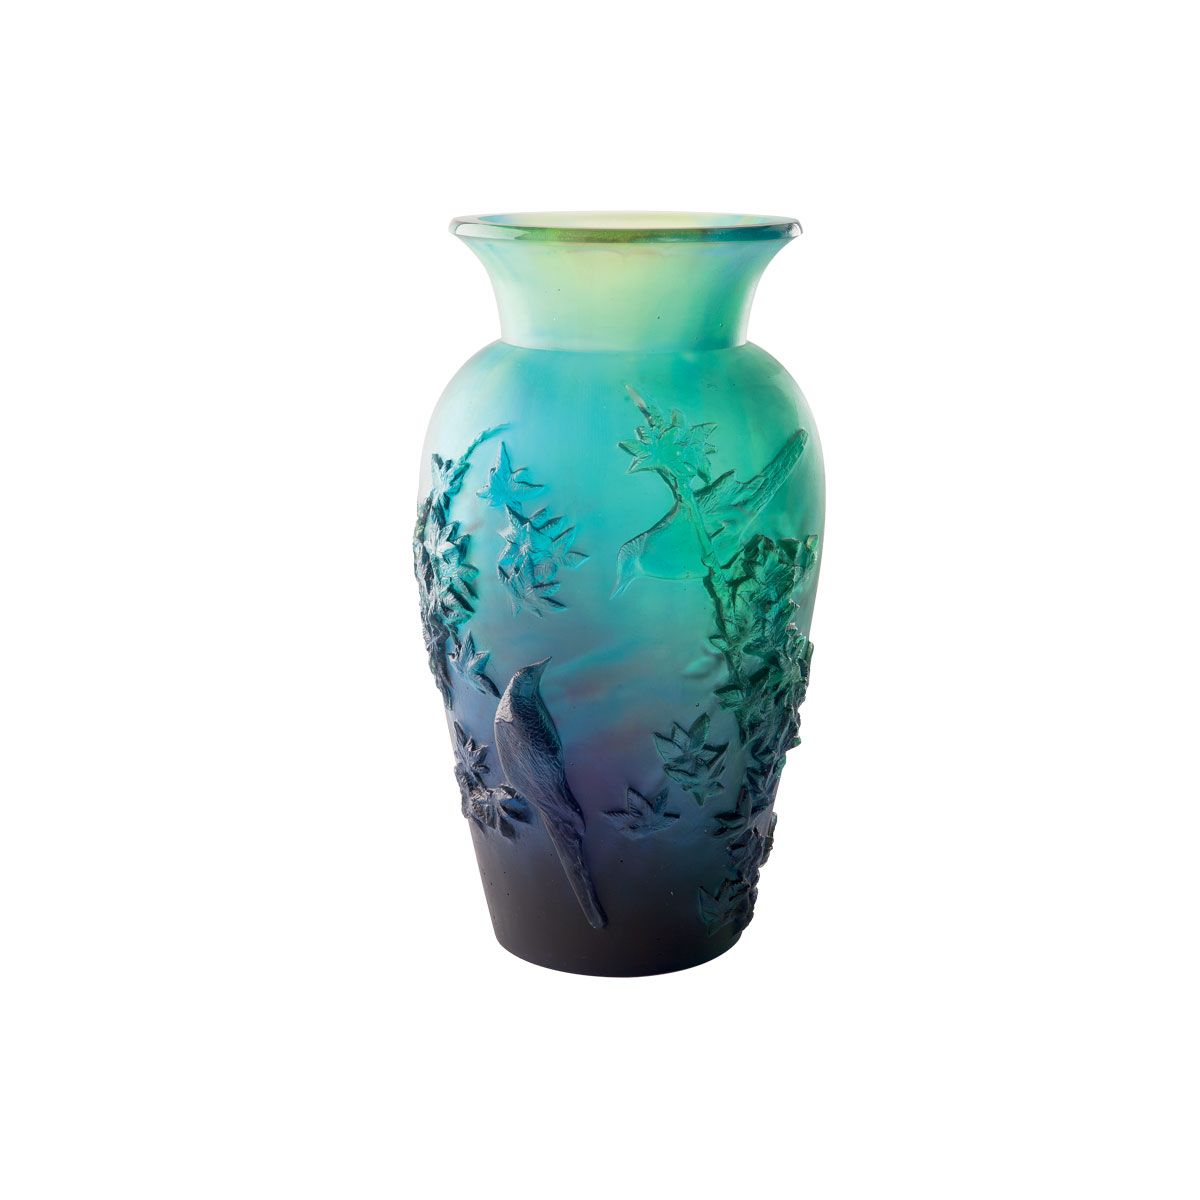 Daum Winter Vase by Shogo Kariyazaki, Limited Edition